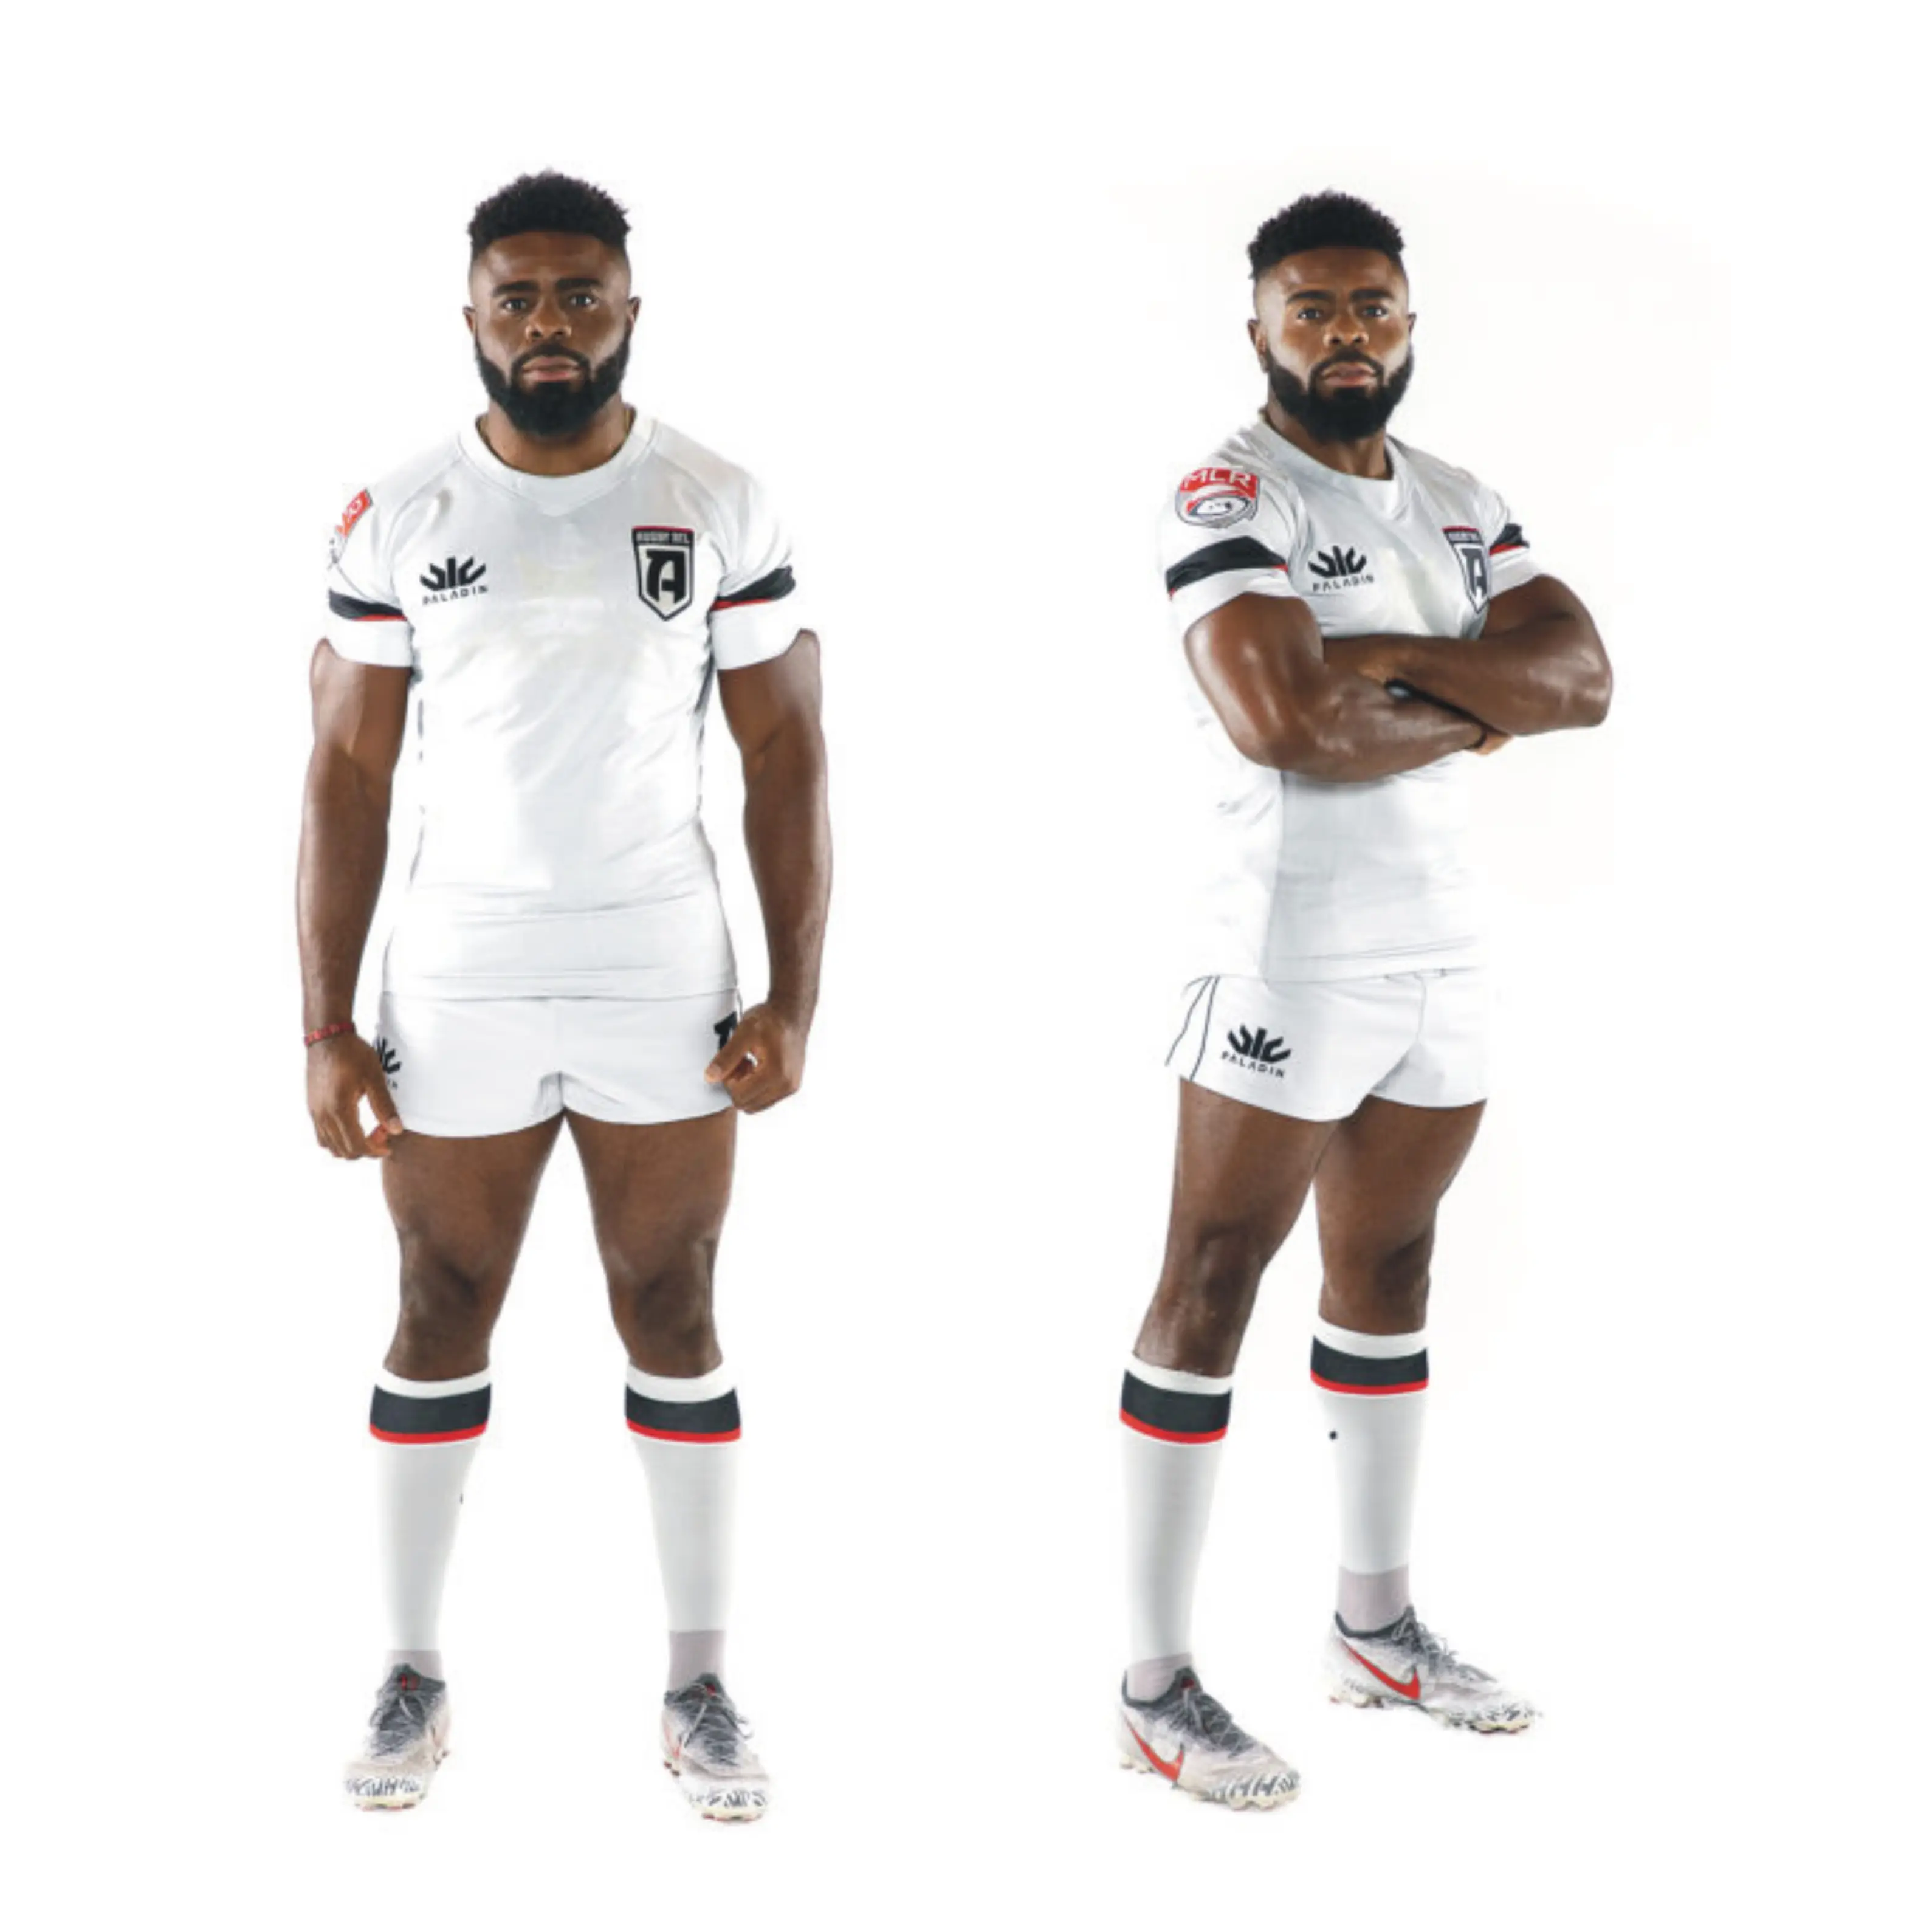 Camiseta inglesa oficial personalizada para mujer, kit de rugby, proveedores